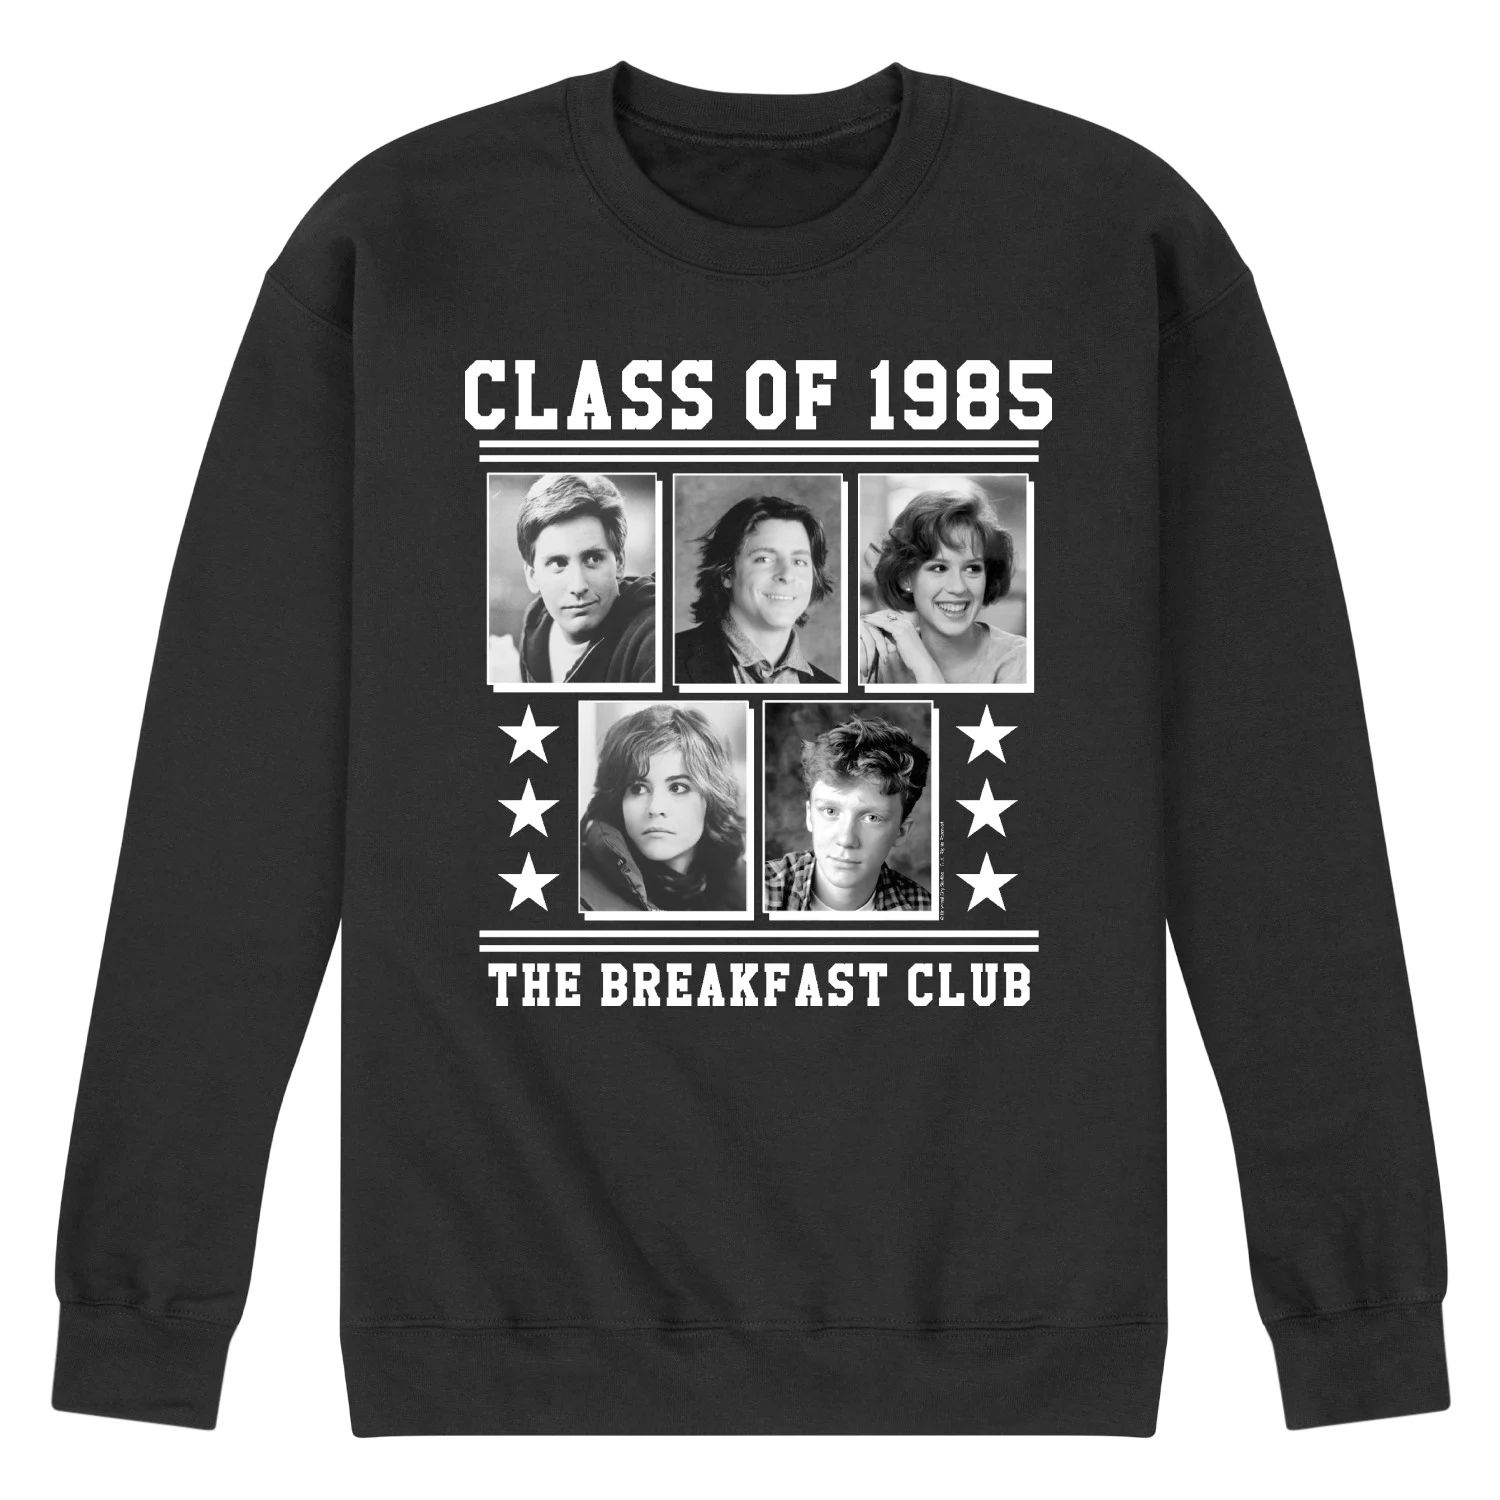 Мужской свитшот с графическим рисунком The Breakfast Club Class of 1985 Licensed Character